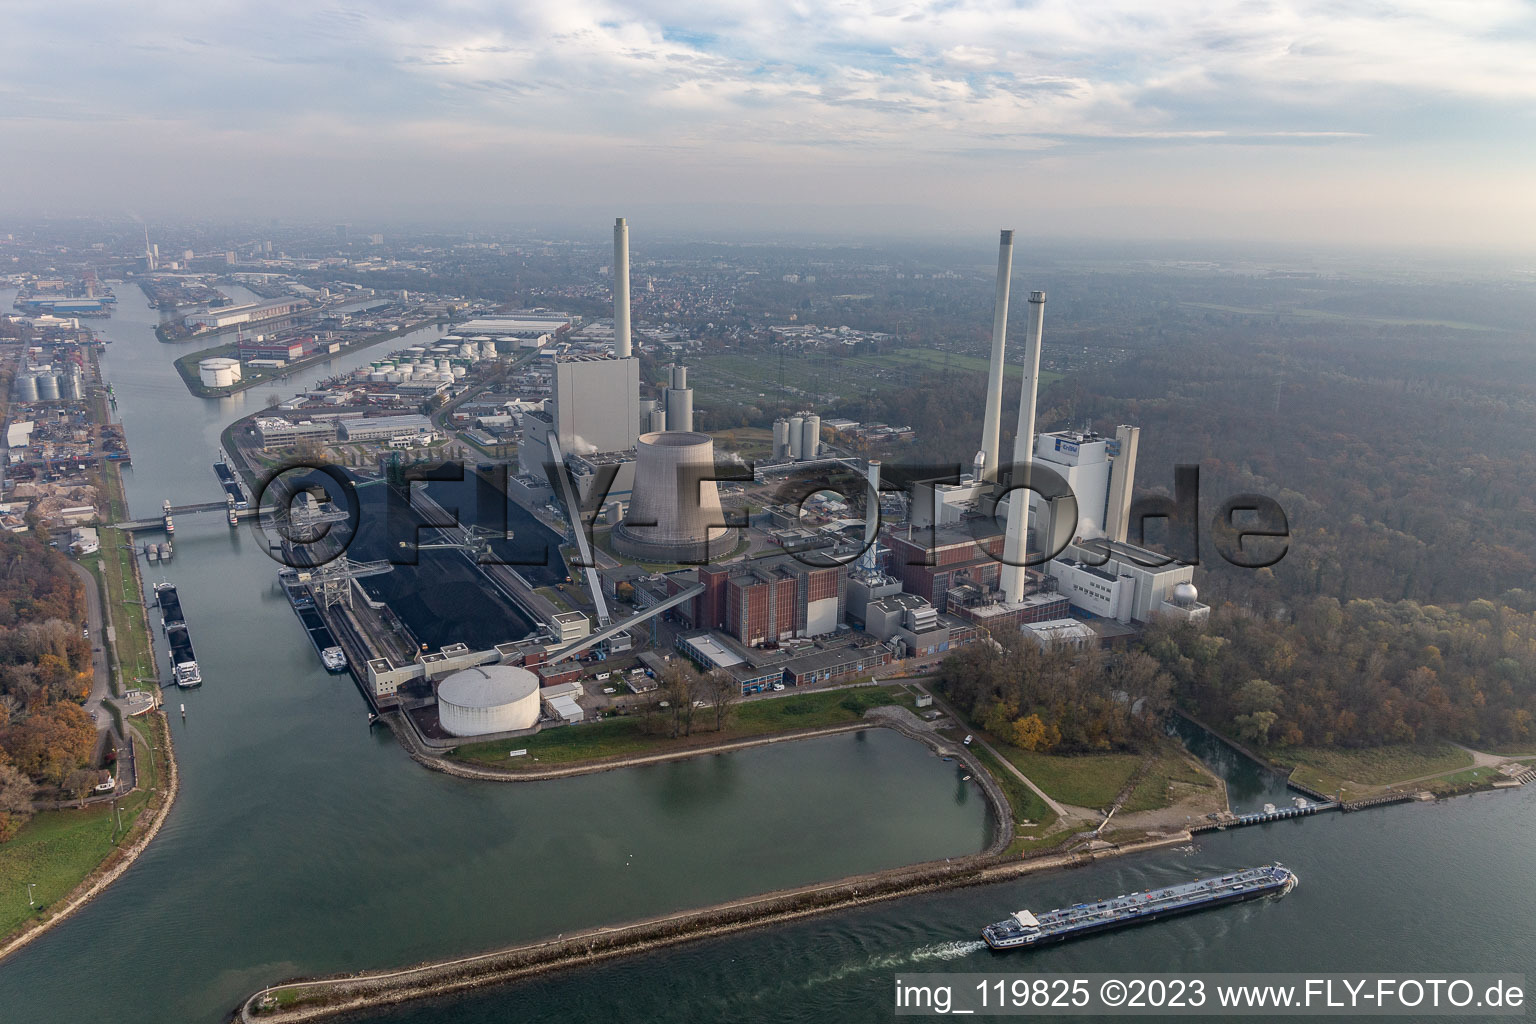 Aerial view of Power plants and exhaust towers of coal power station EnBW Energie Baden-Wuerttemberg AG, Rheinhafen-Dampfkraftwerk Karlsruhe in the district Daxlanden in Karlsruhe in the state Baden-Wurttemberg, Germany